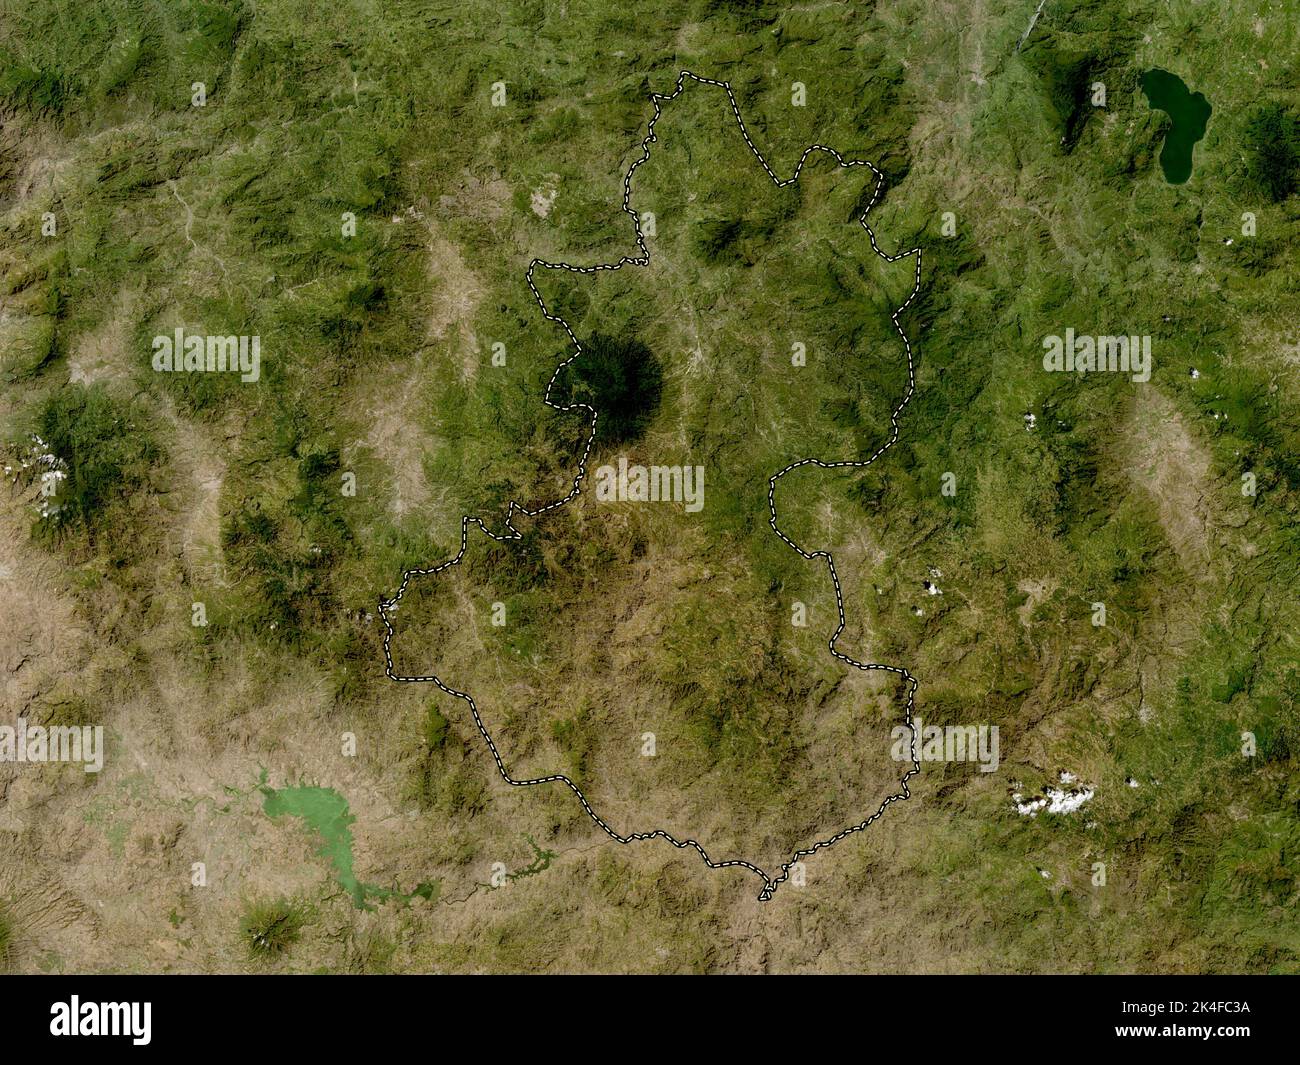 Lempira, department of Honduras. Low resolution satellite map Stock Photo